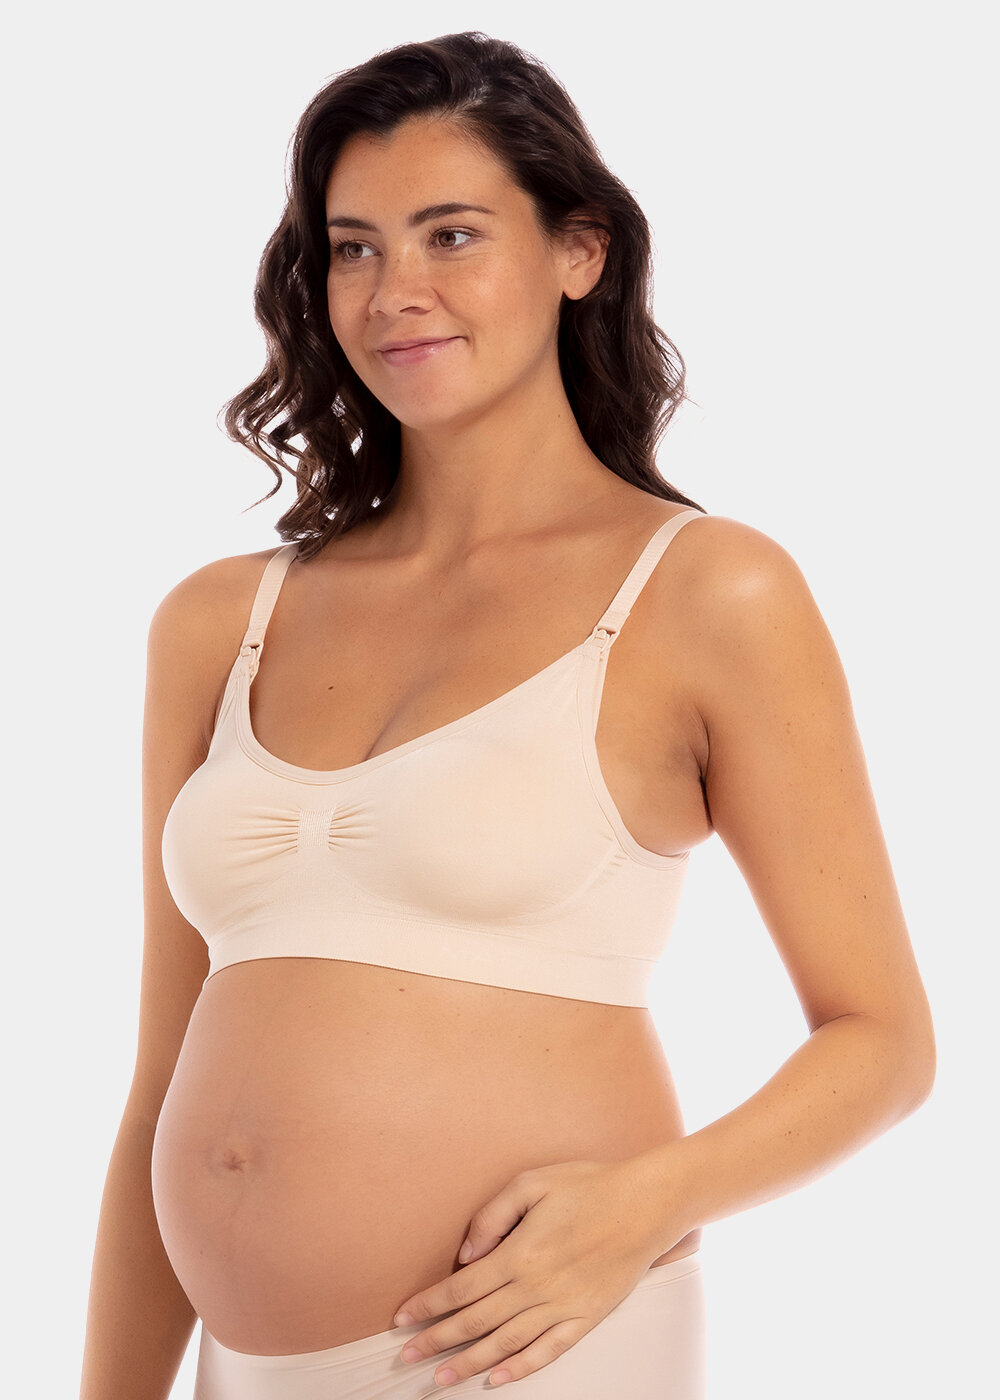 URMAGIC Women's Stretchy Maternity Bra Breastfeeding Nursing Bras 